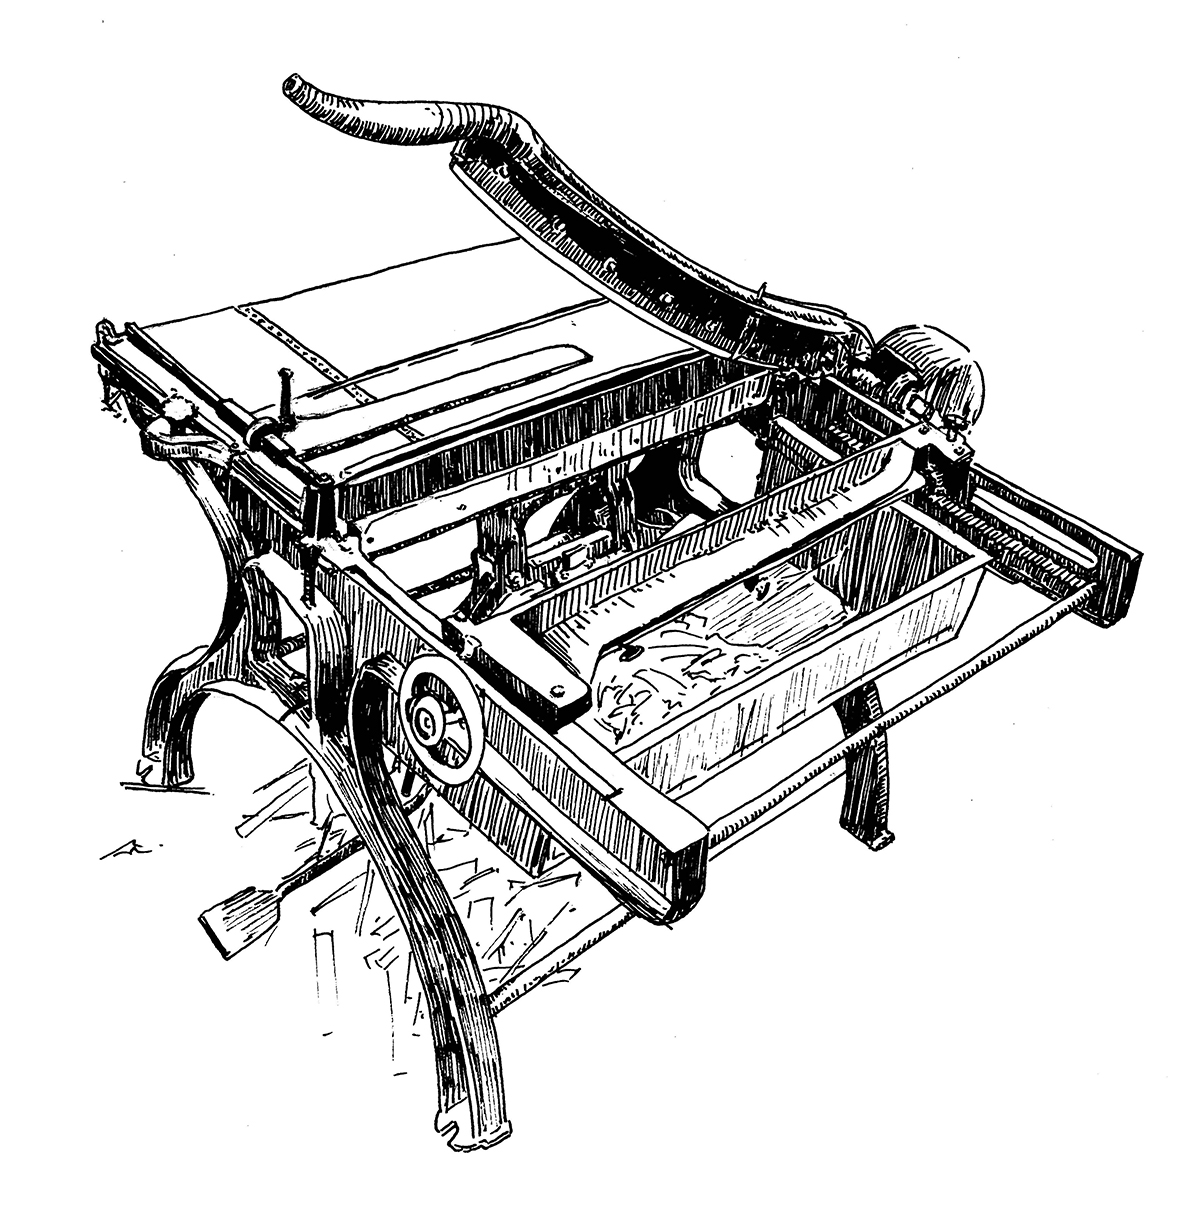 Illustration of a board shear by Yi Bin Liang